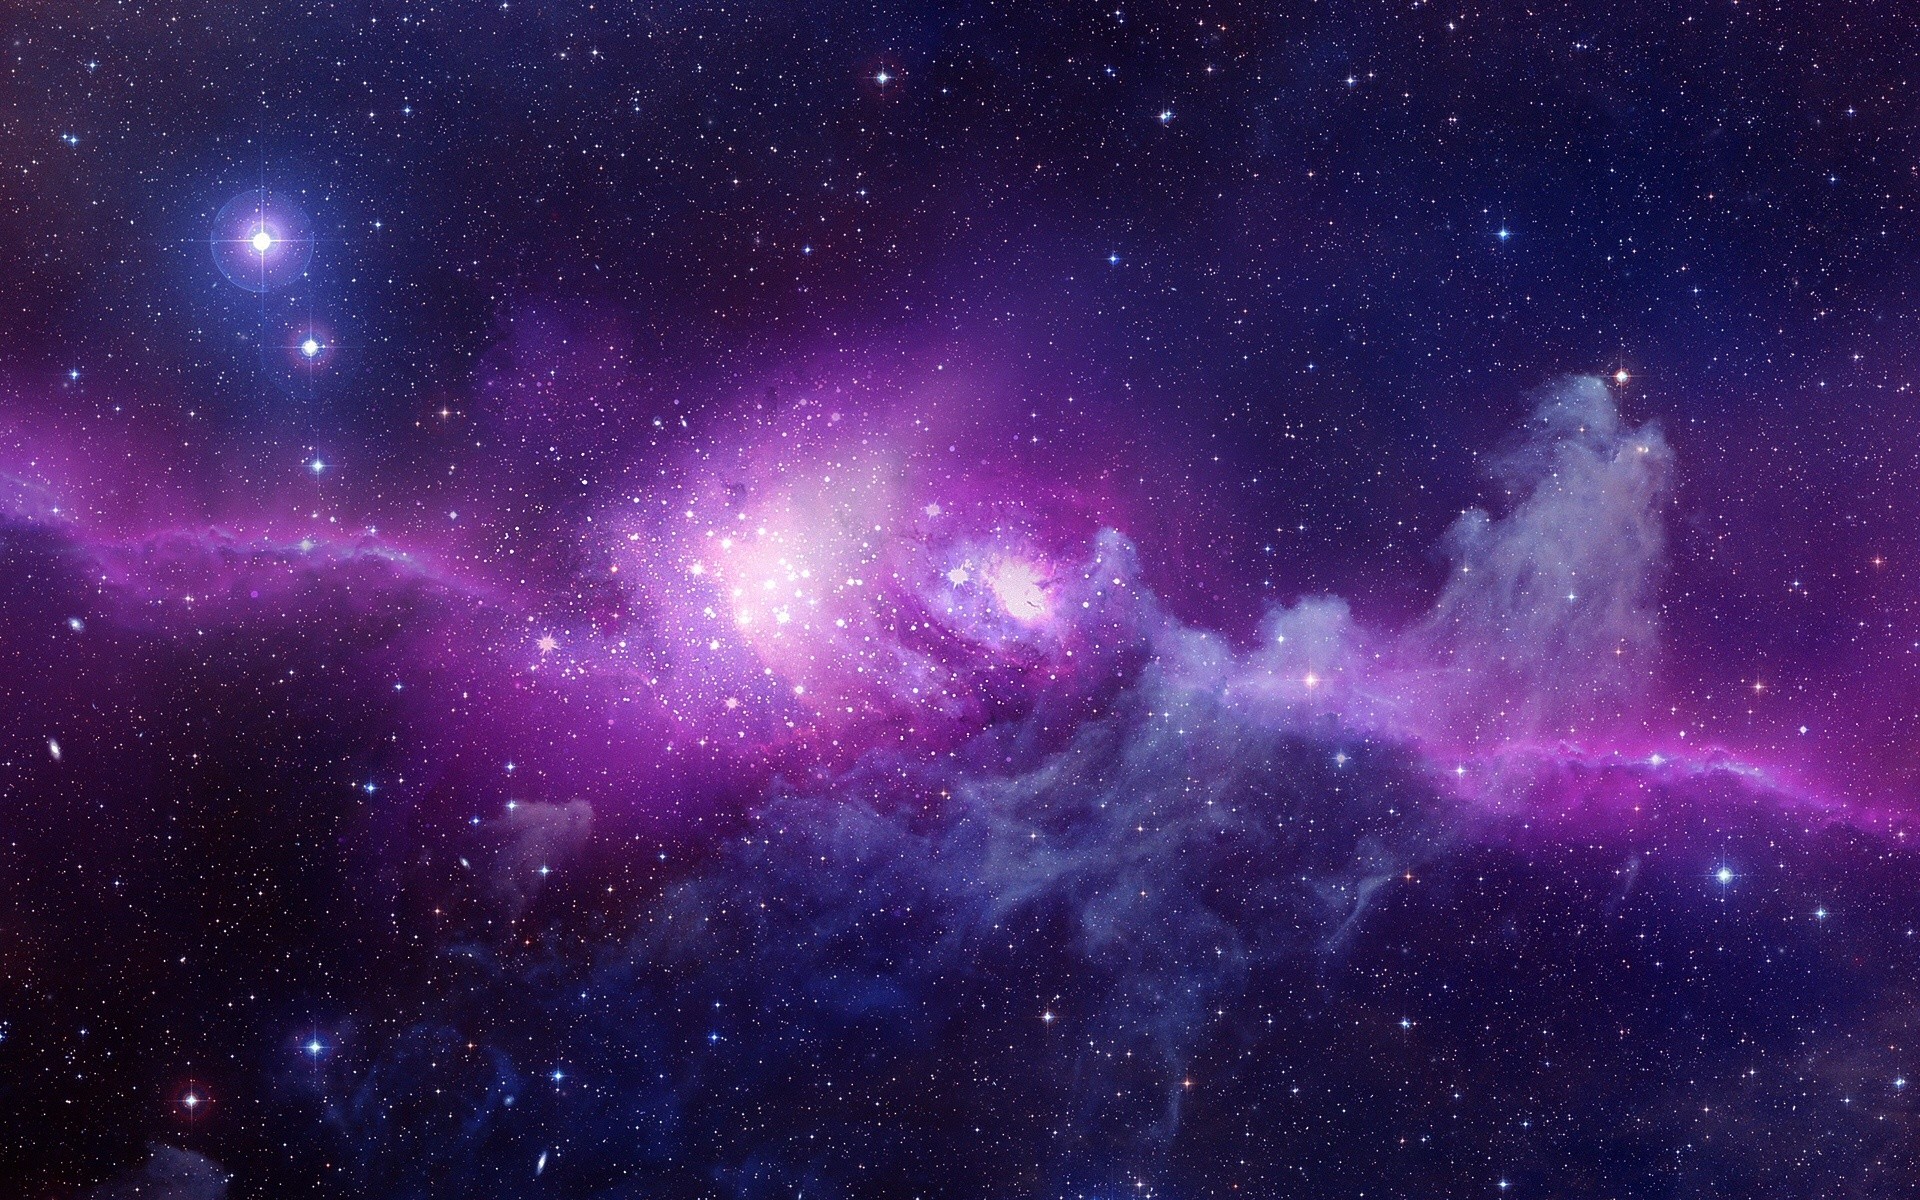 1920x1200 Image for Purple Galaxy Wallpaper Desktop #q6nnz | Ð¥Ð¾ÑÑ Ð·Ð´ÐµÑÑ Ð¿Ð¾Ð±ÑÐ²Ð°ÑÑ |  Pinterest | Purple galaxy wallpaper and Galaxy hd